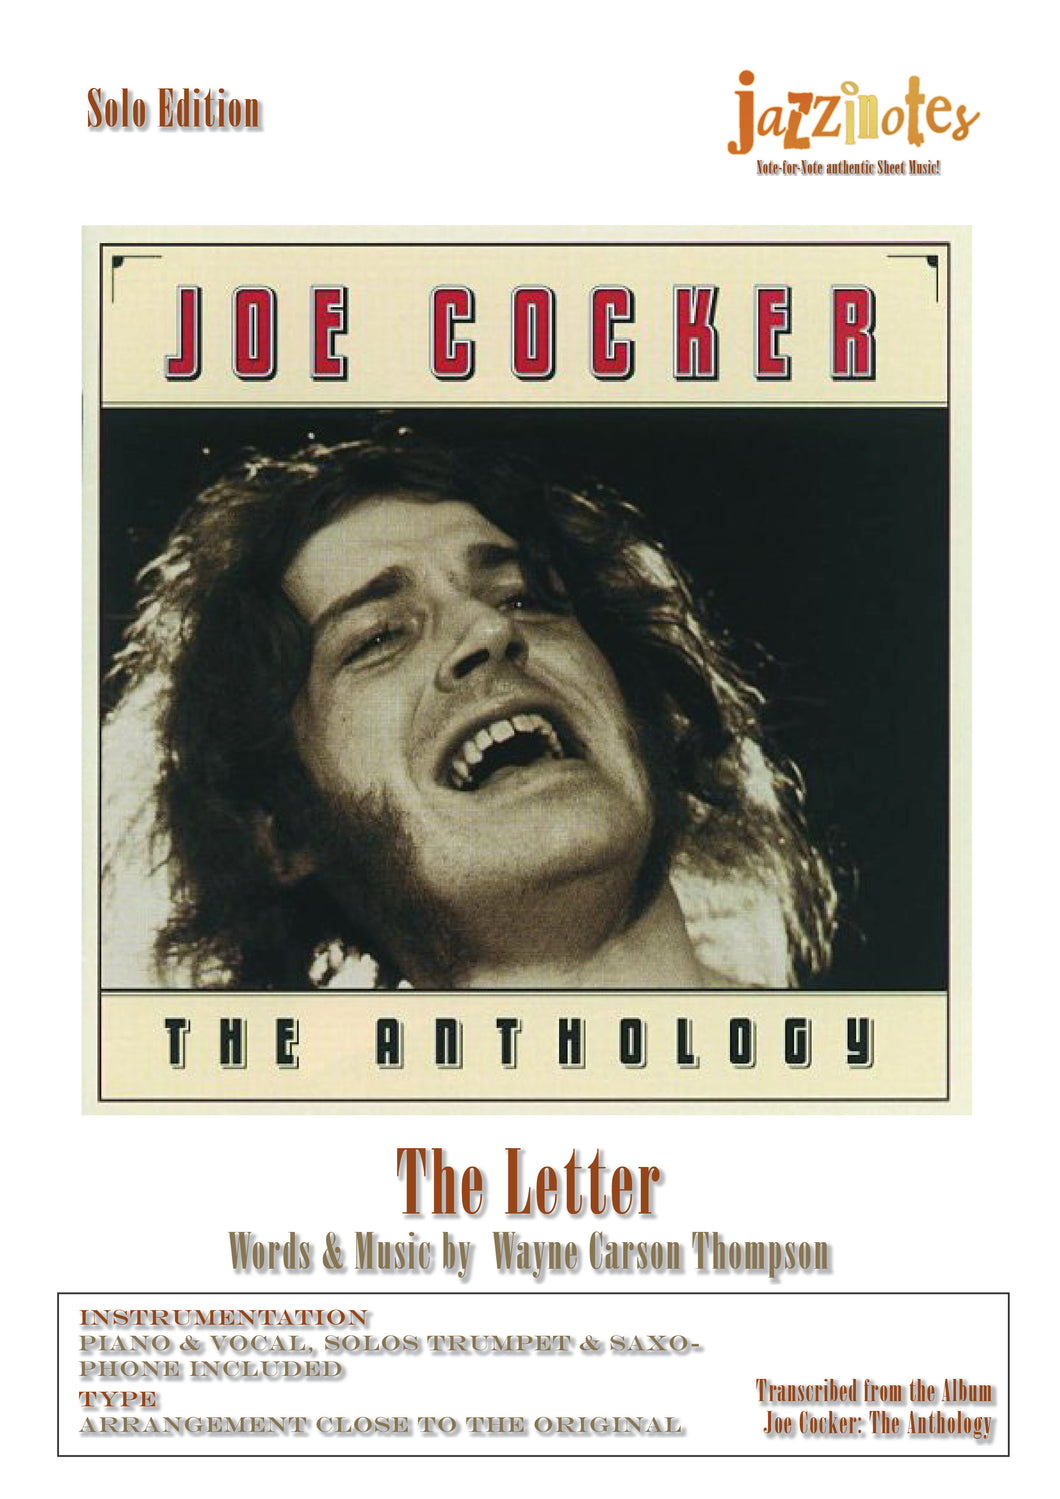 Cocker, Joe: The Letter (Live) - Sheet Music Download